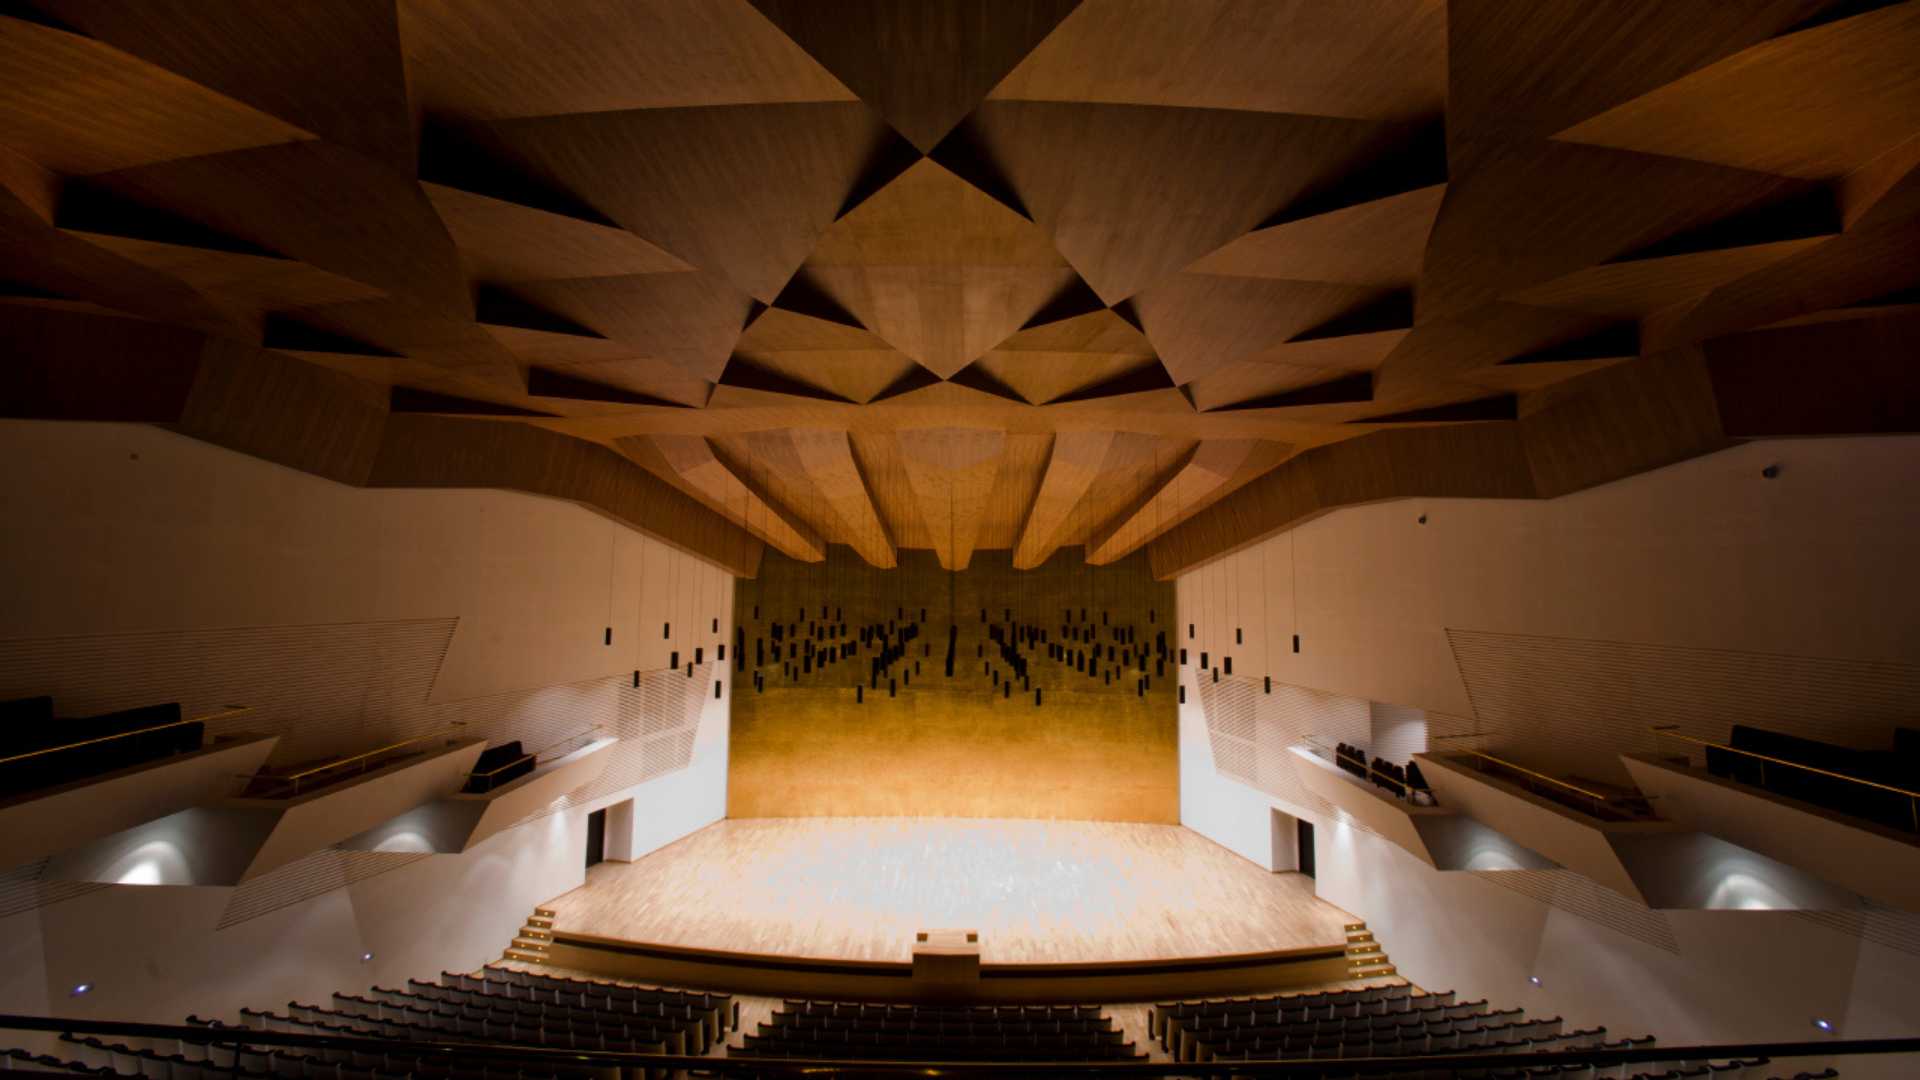 ADDA, Auditorium de la Députation provinciale d’Alicante